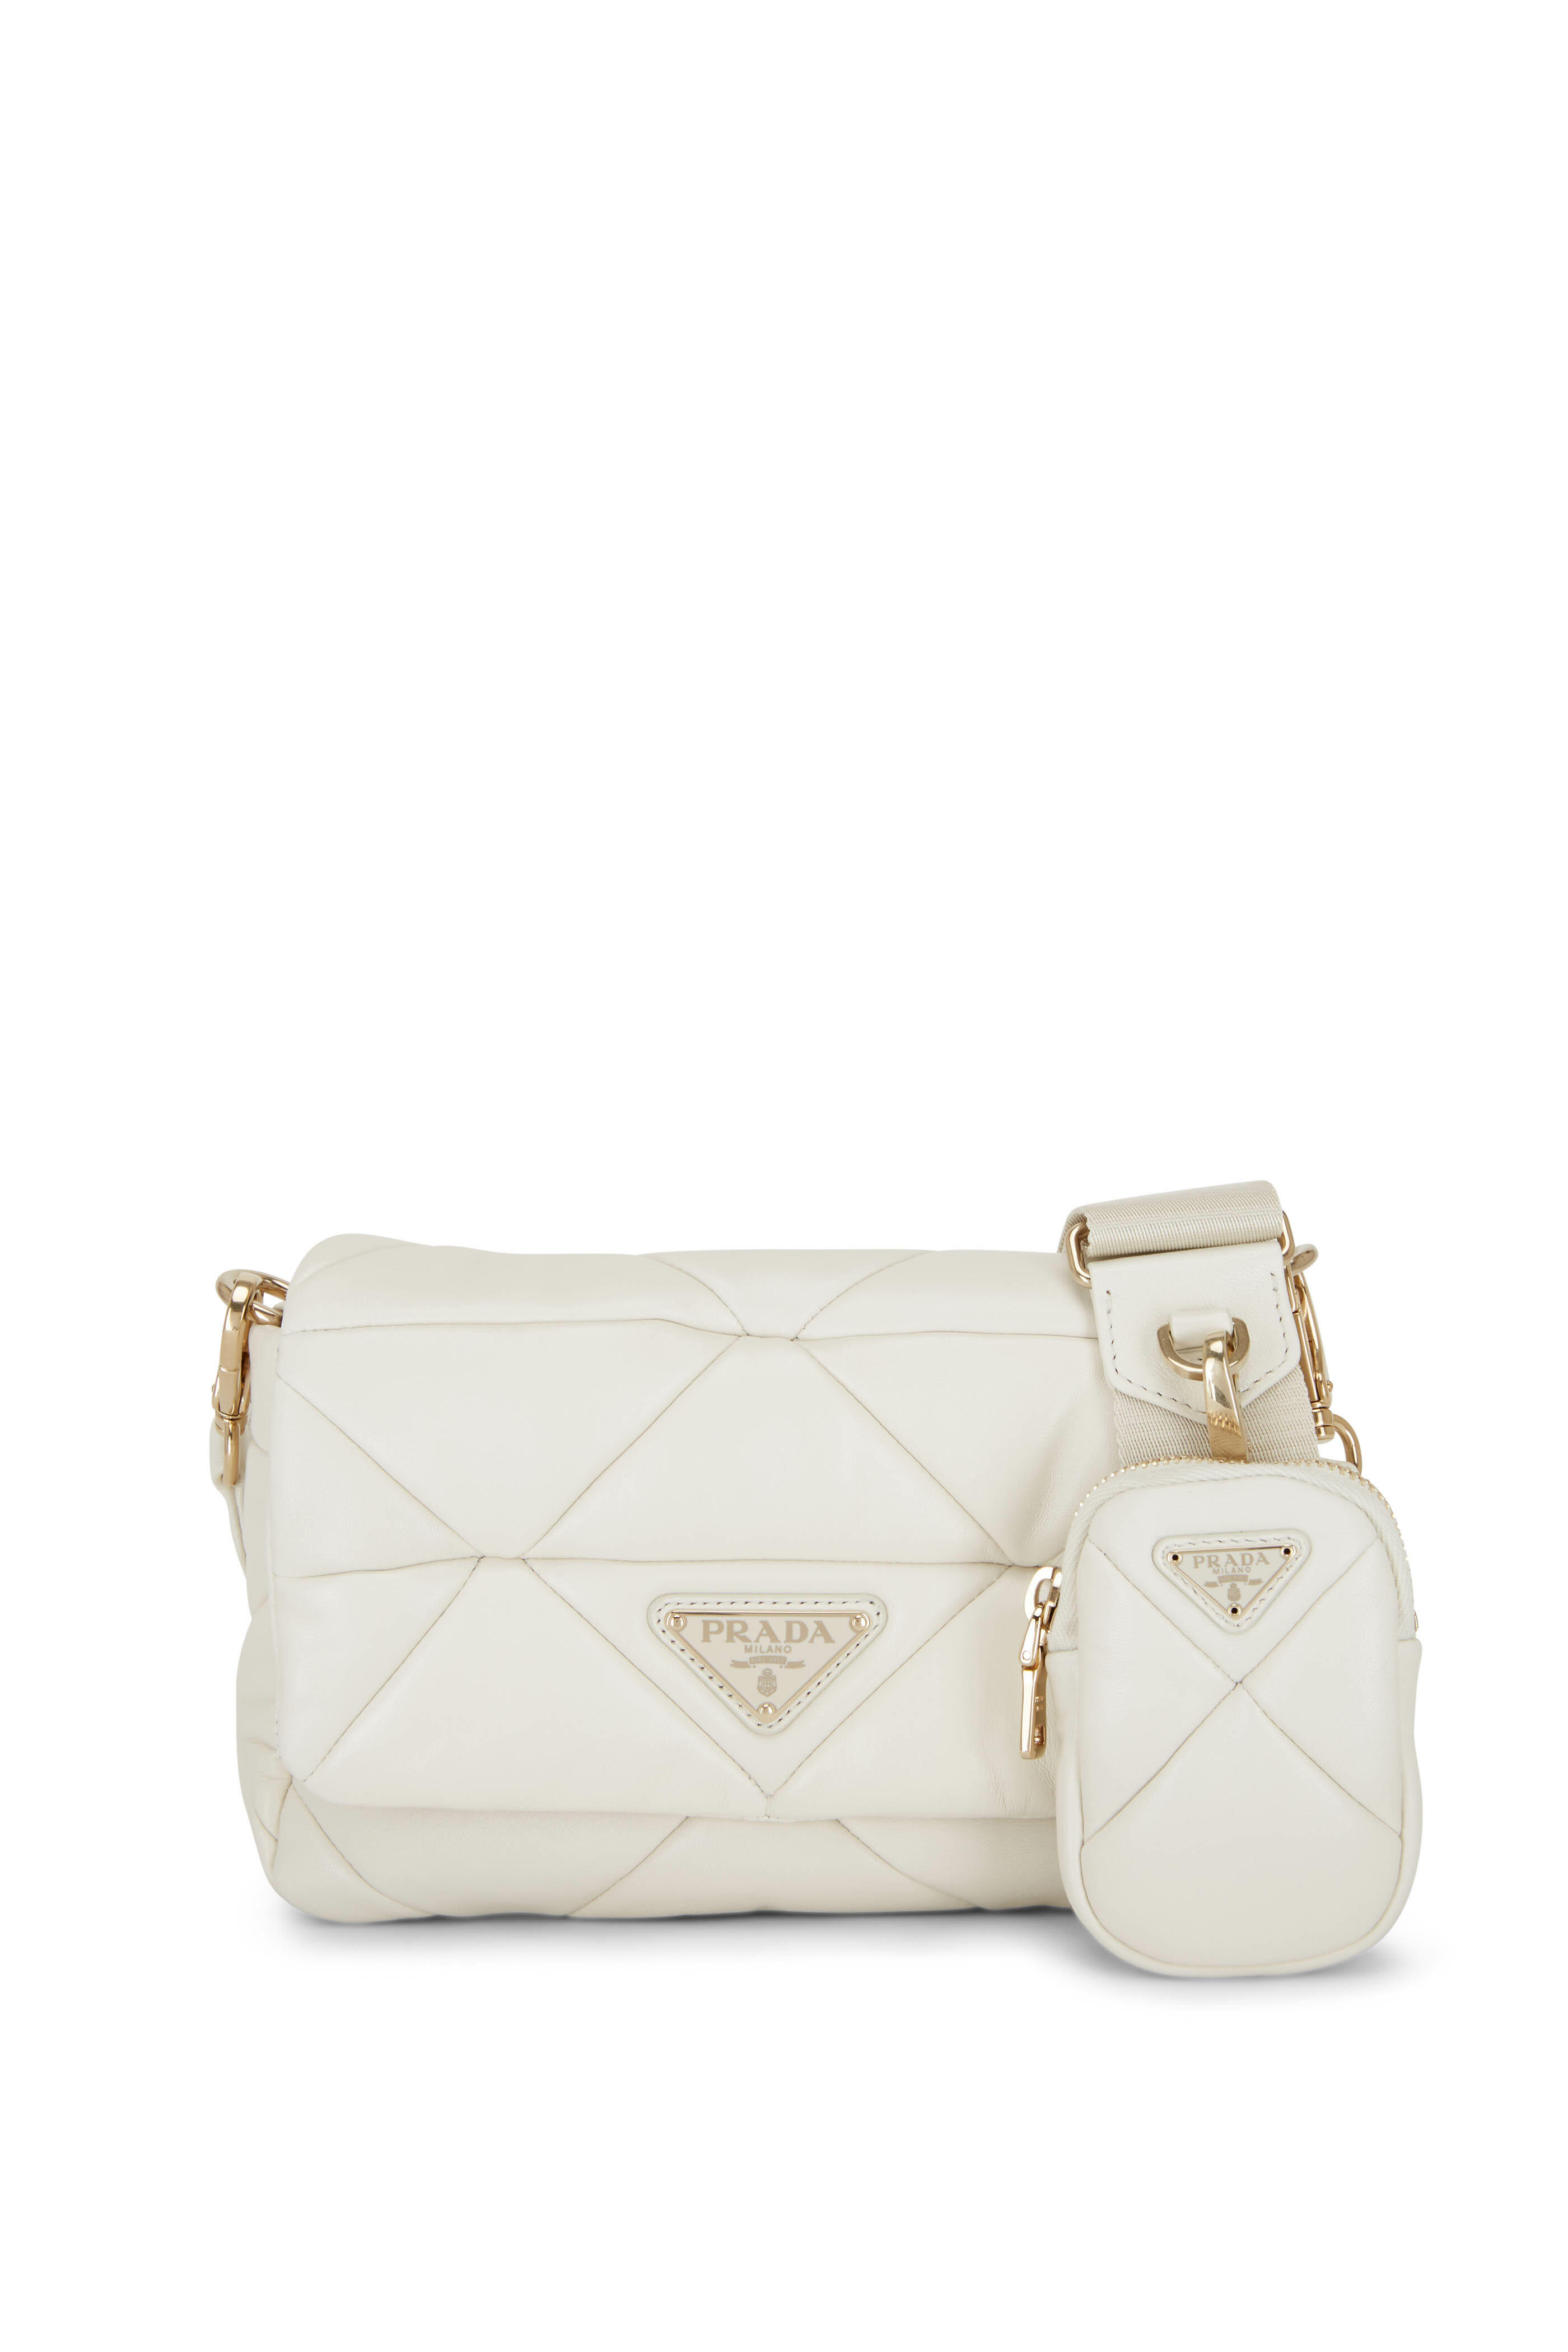 Prada White Leather Prada Tress Shoulder Bag 1BD246 - Brandville Luxury  Collection